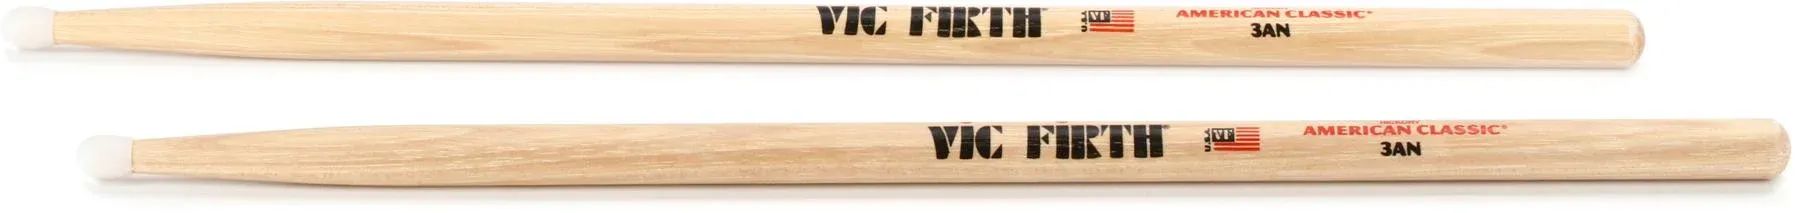 Vic Firth American Edition. Vic Firth 1a палки, орех. Sticks of rock